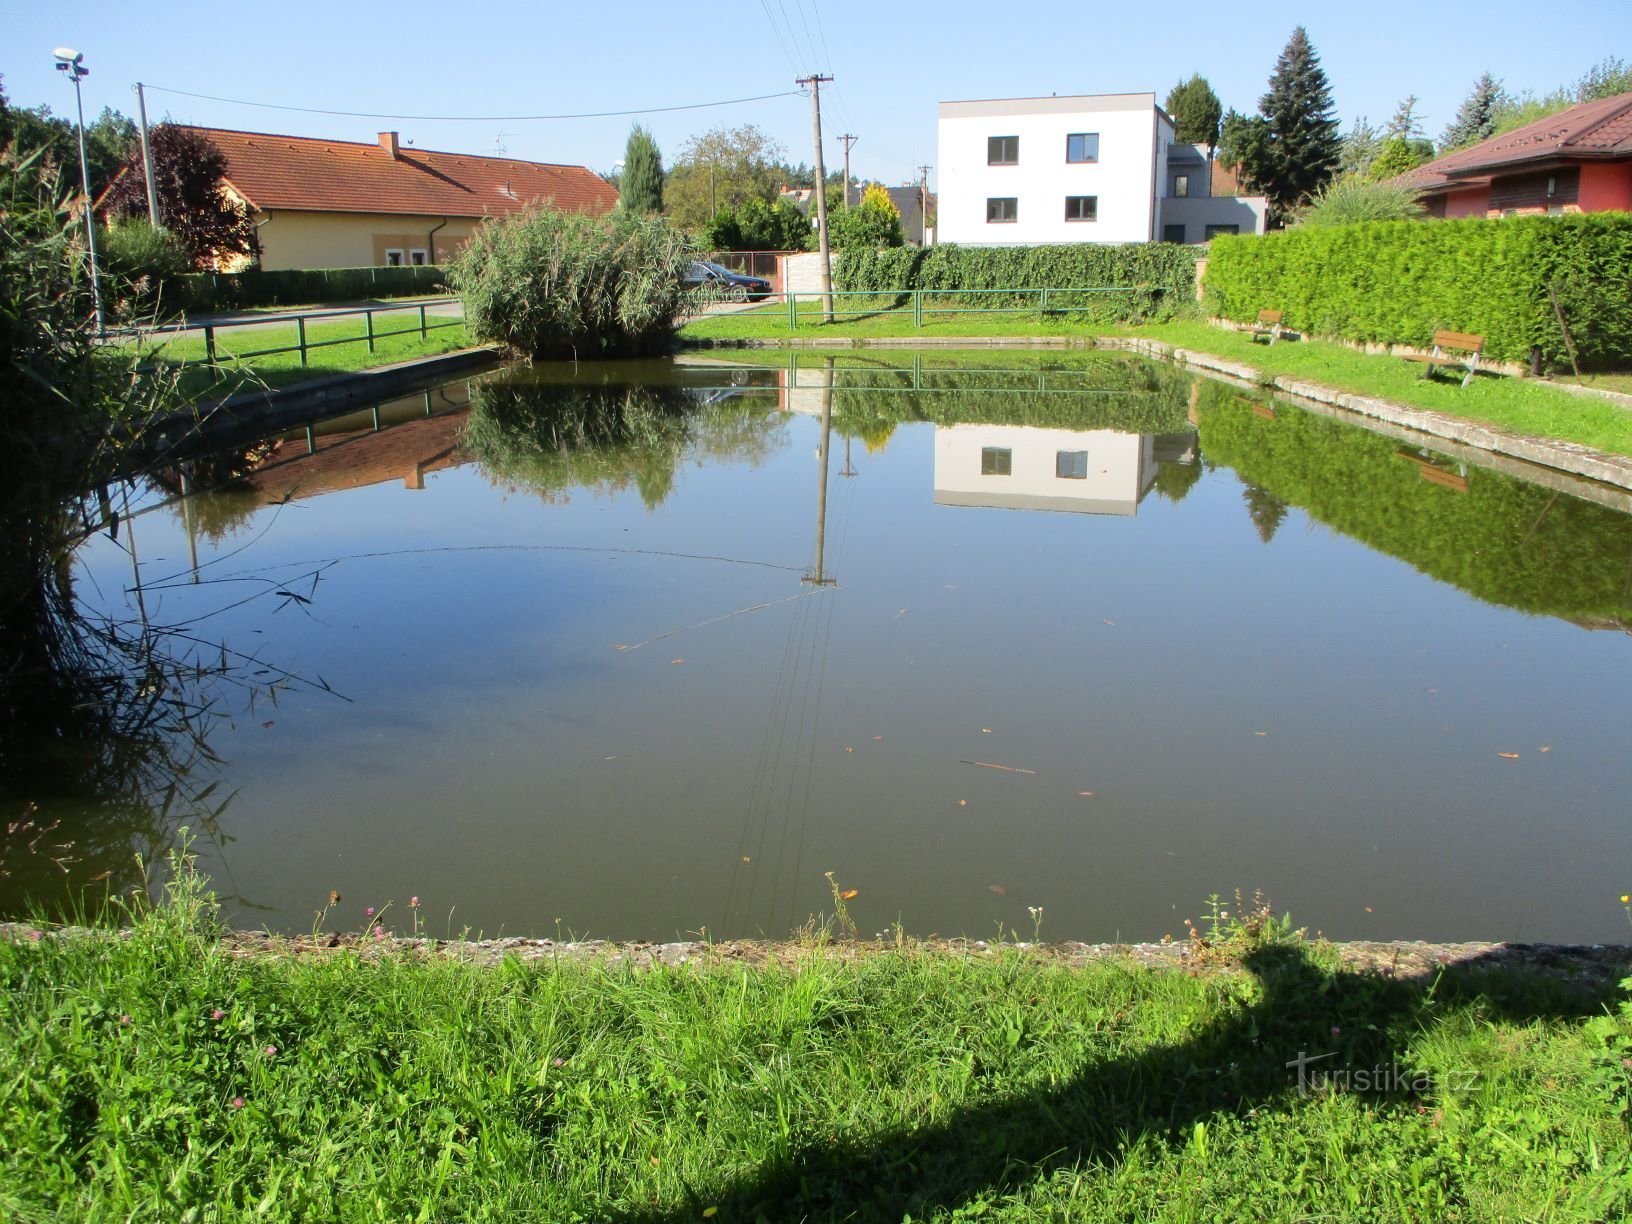 Village pond (Hrádek, 9.9.2020/XNUMX/XNUMX)